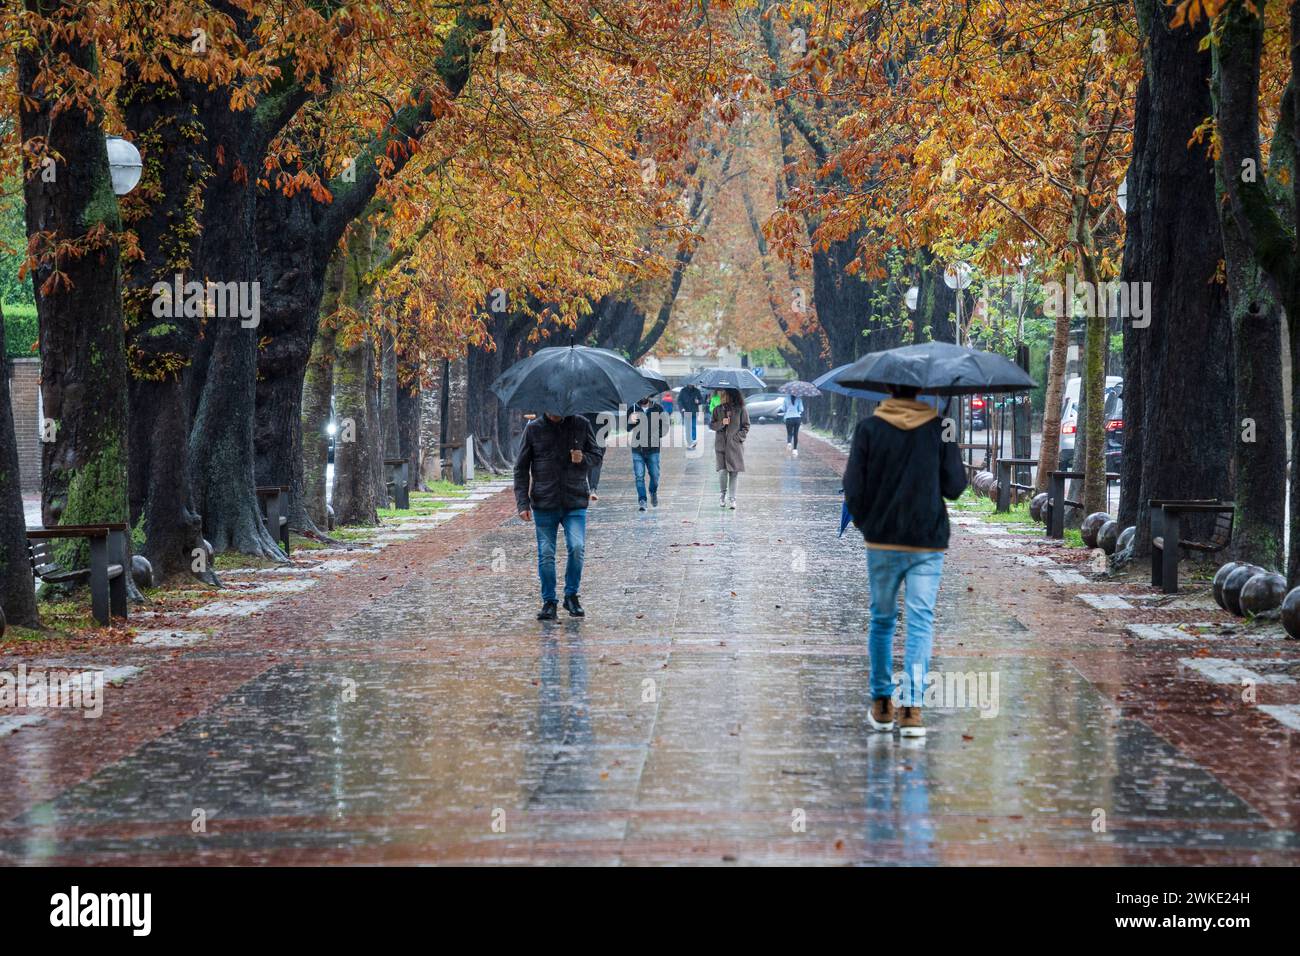 Fray Francisco de Vitoria walk, autumn in the rain, Vitoria, Basque country, Spain. Stock Photo